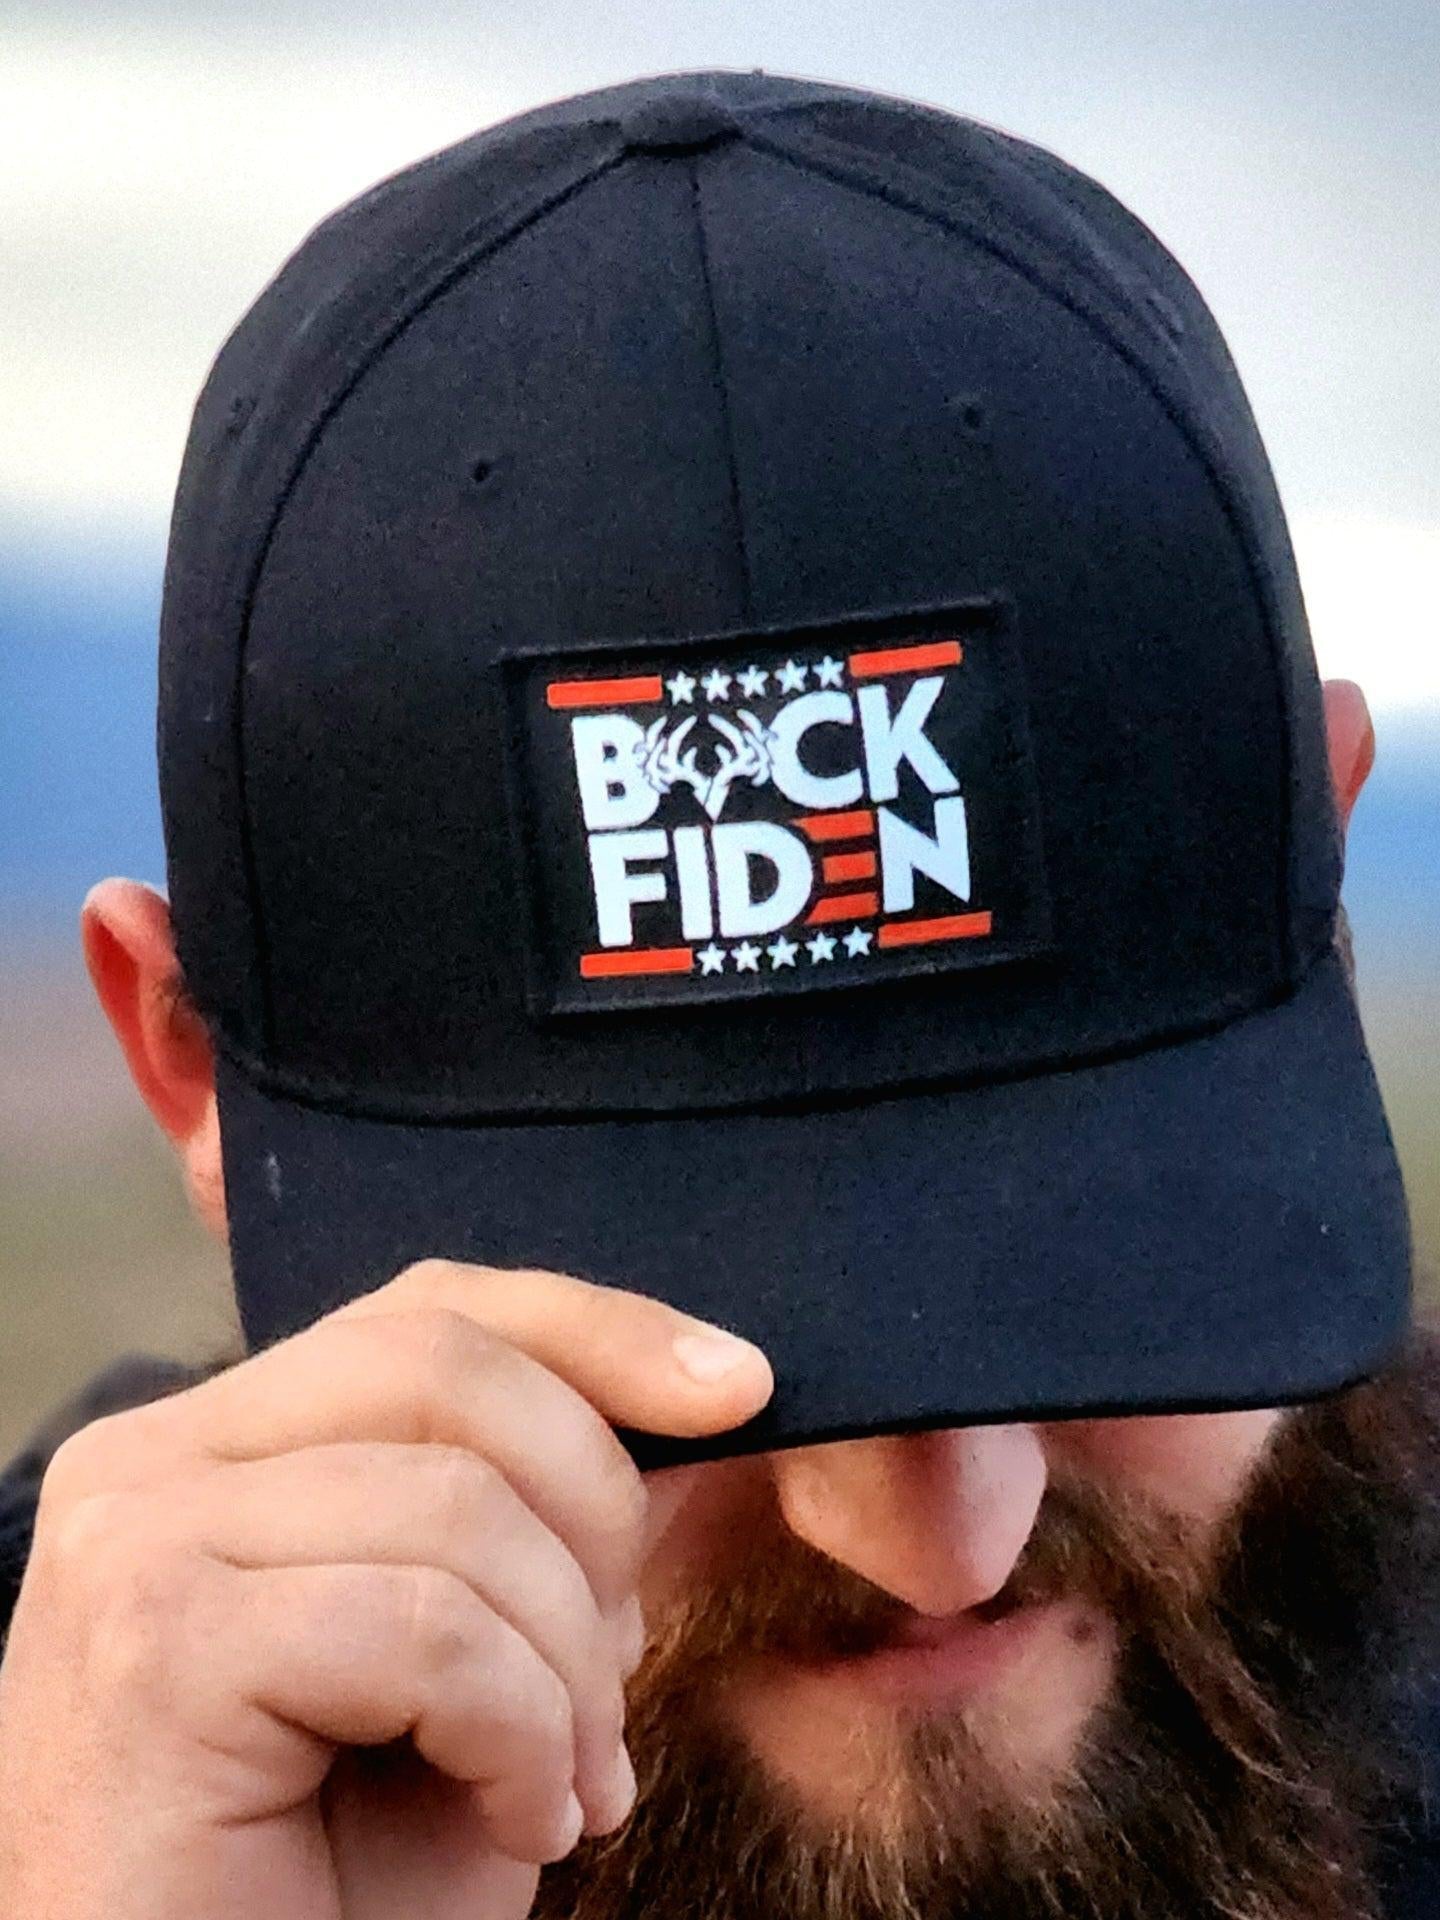 Buck Fiden ™ FlexFit Hat RakAdx at